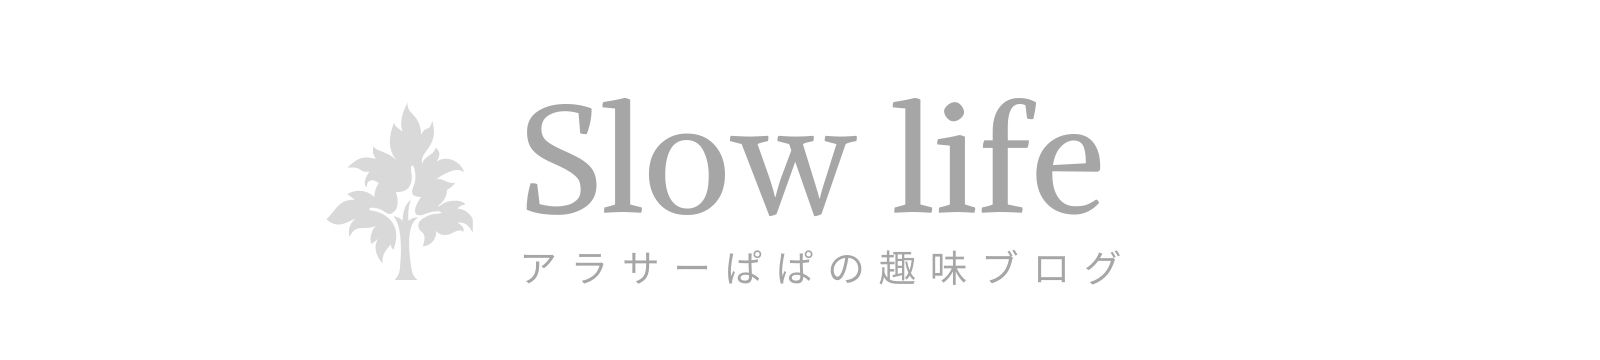 Slow life blog